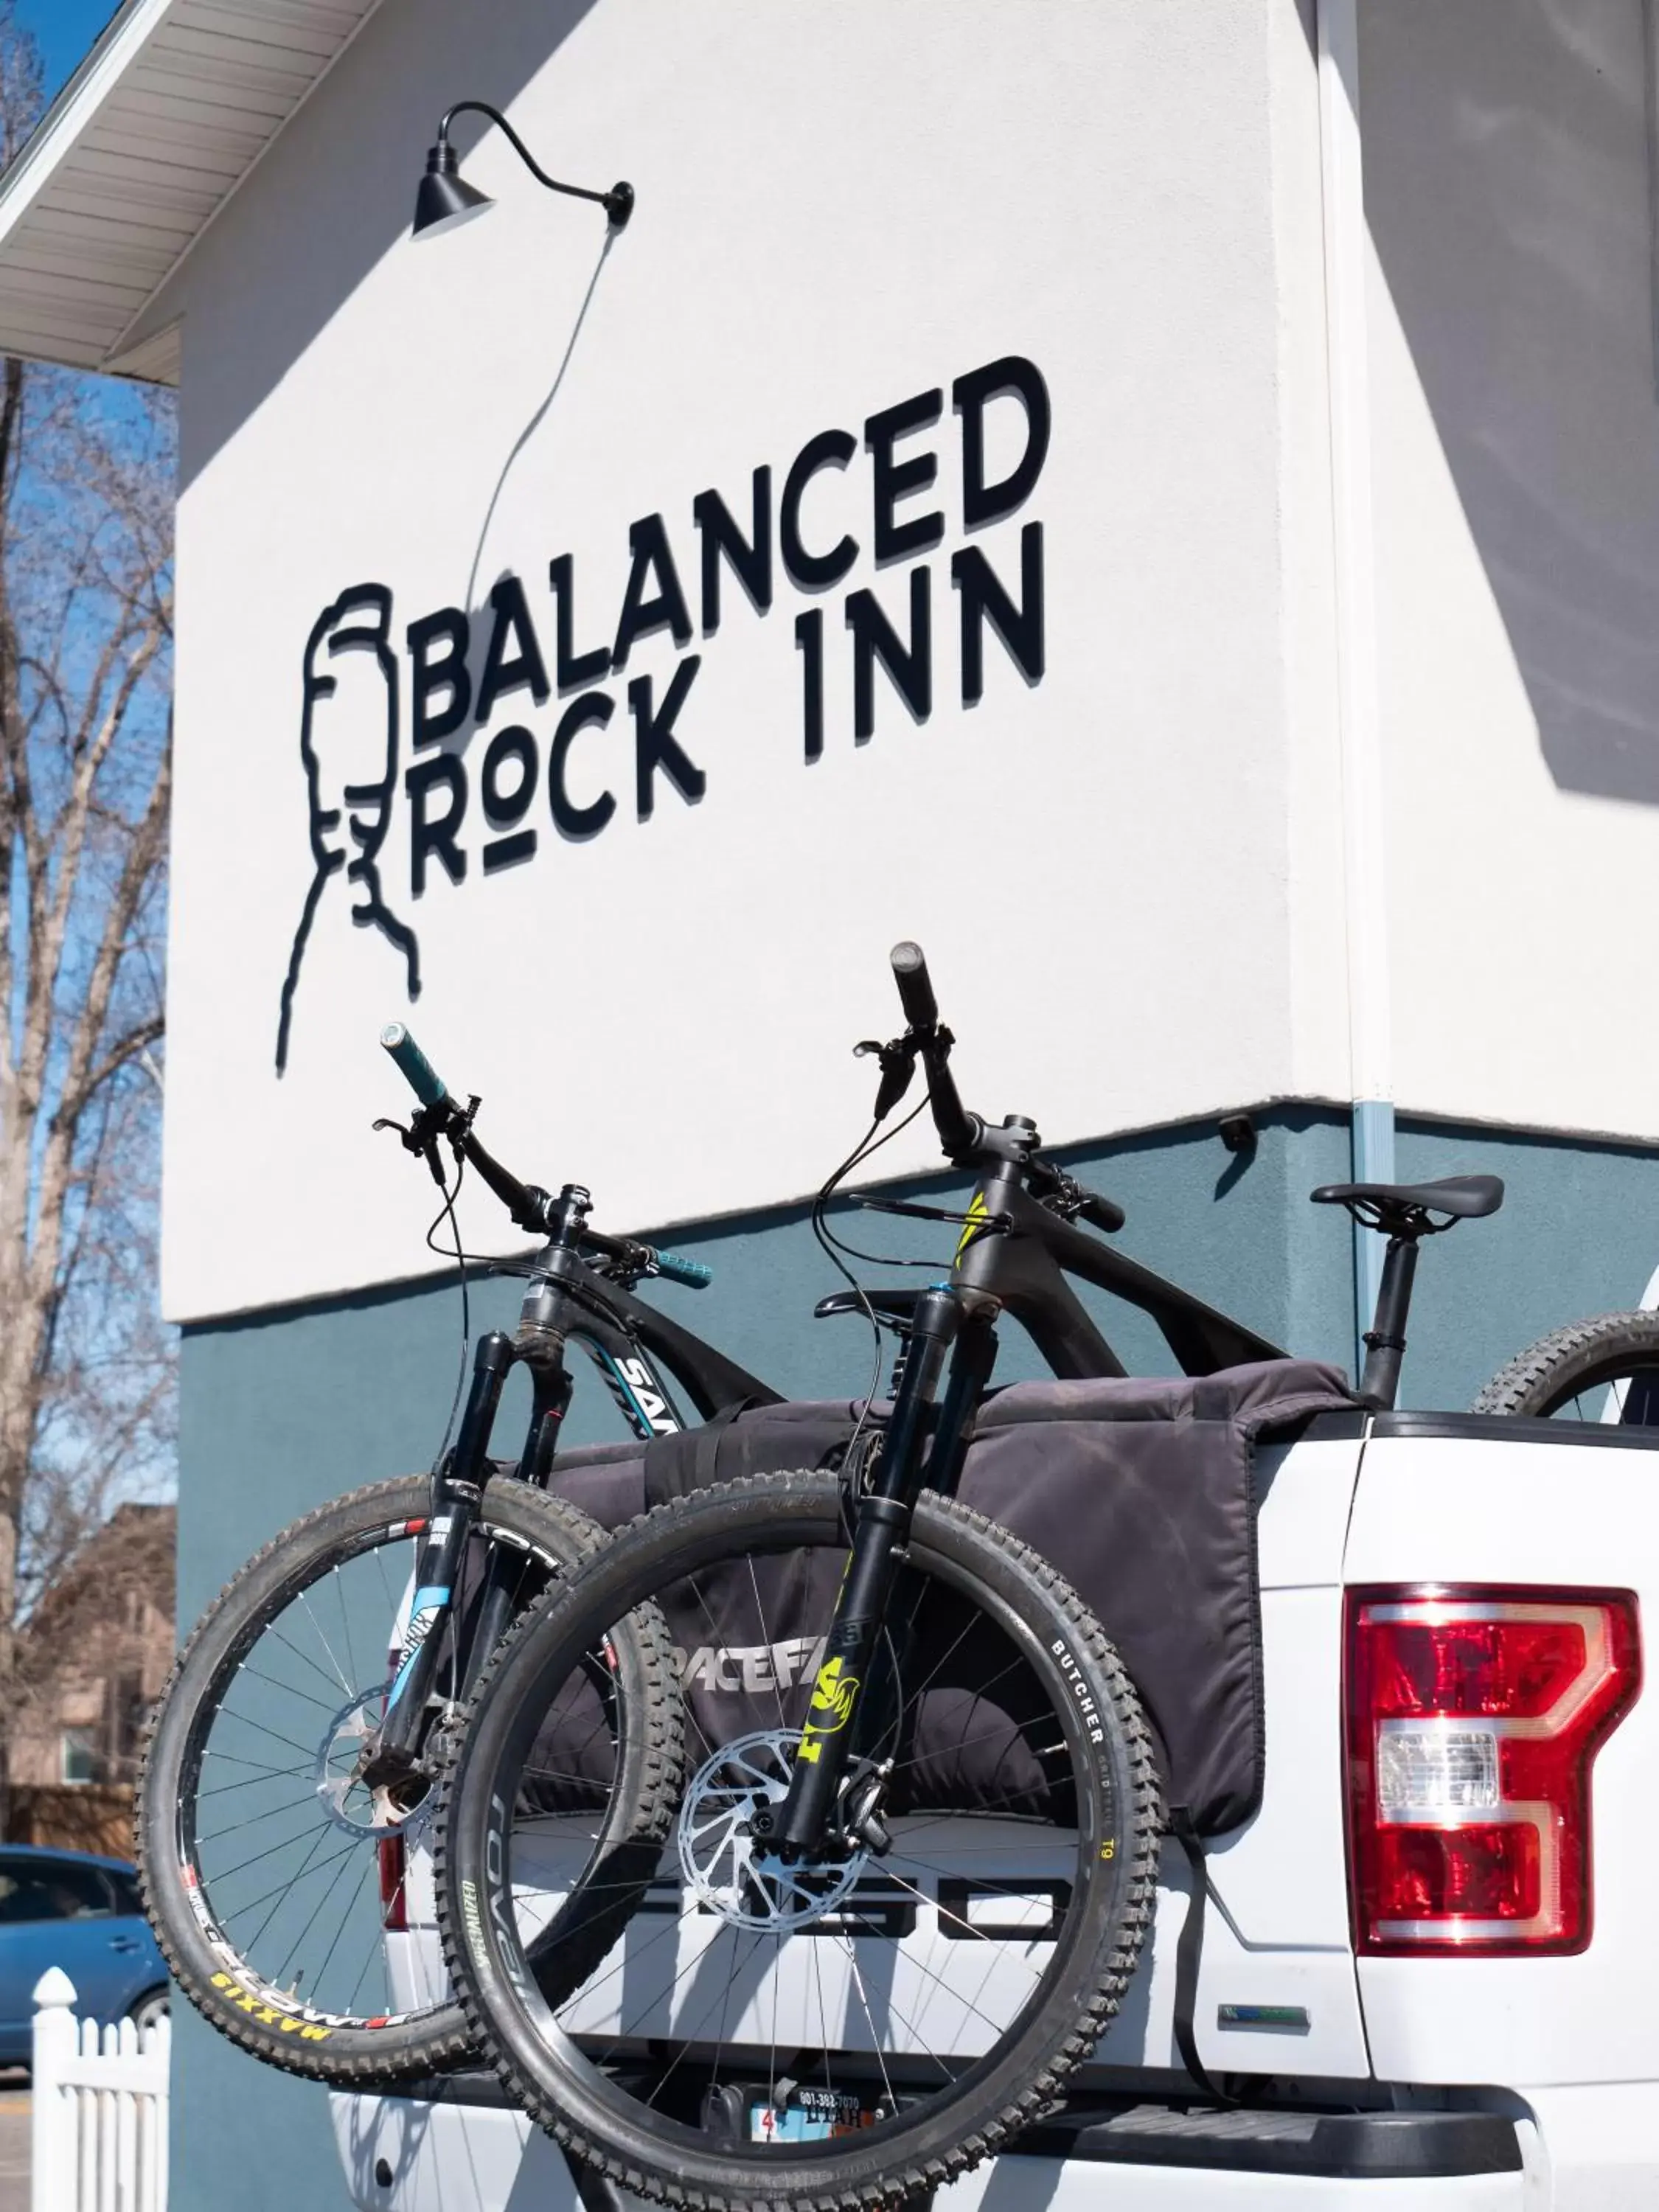 Biking in Balanced Rock Inn